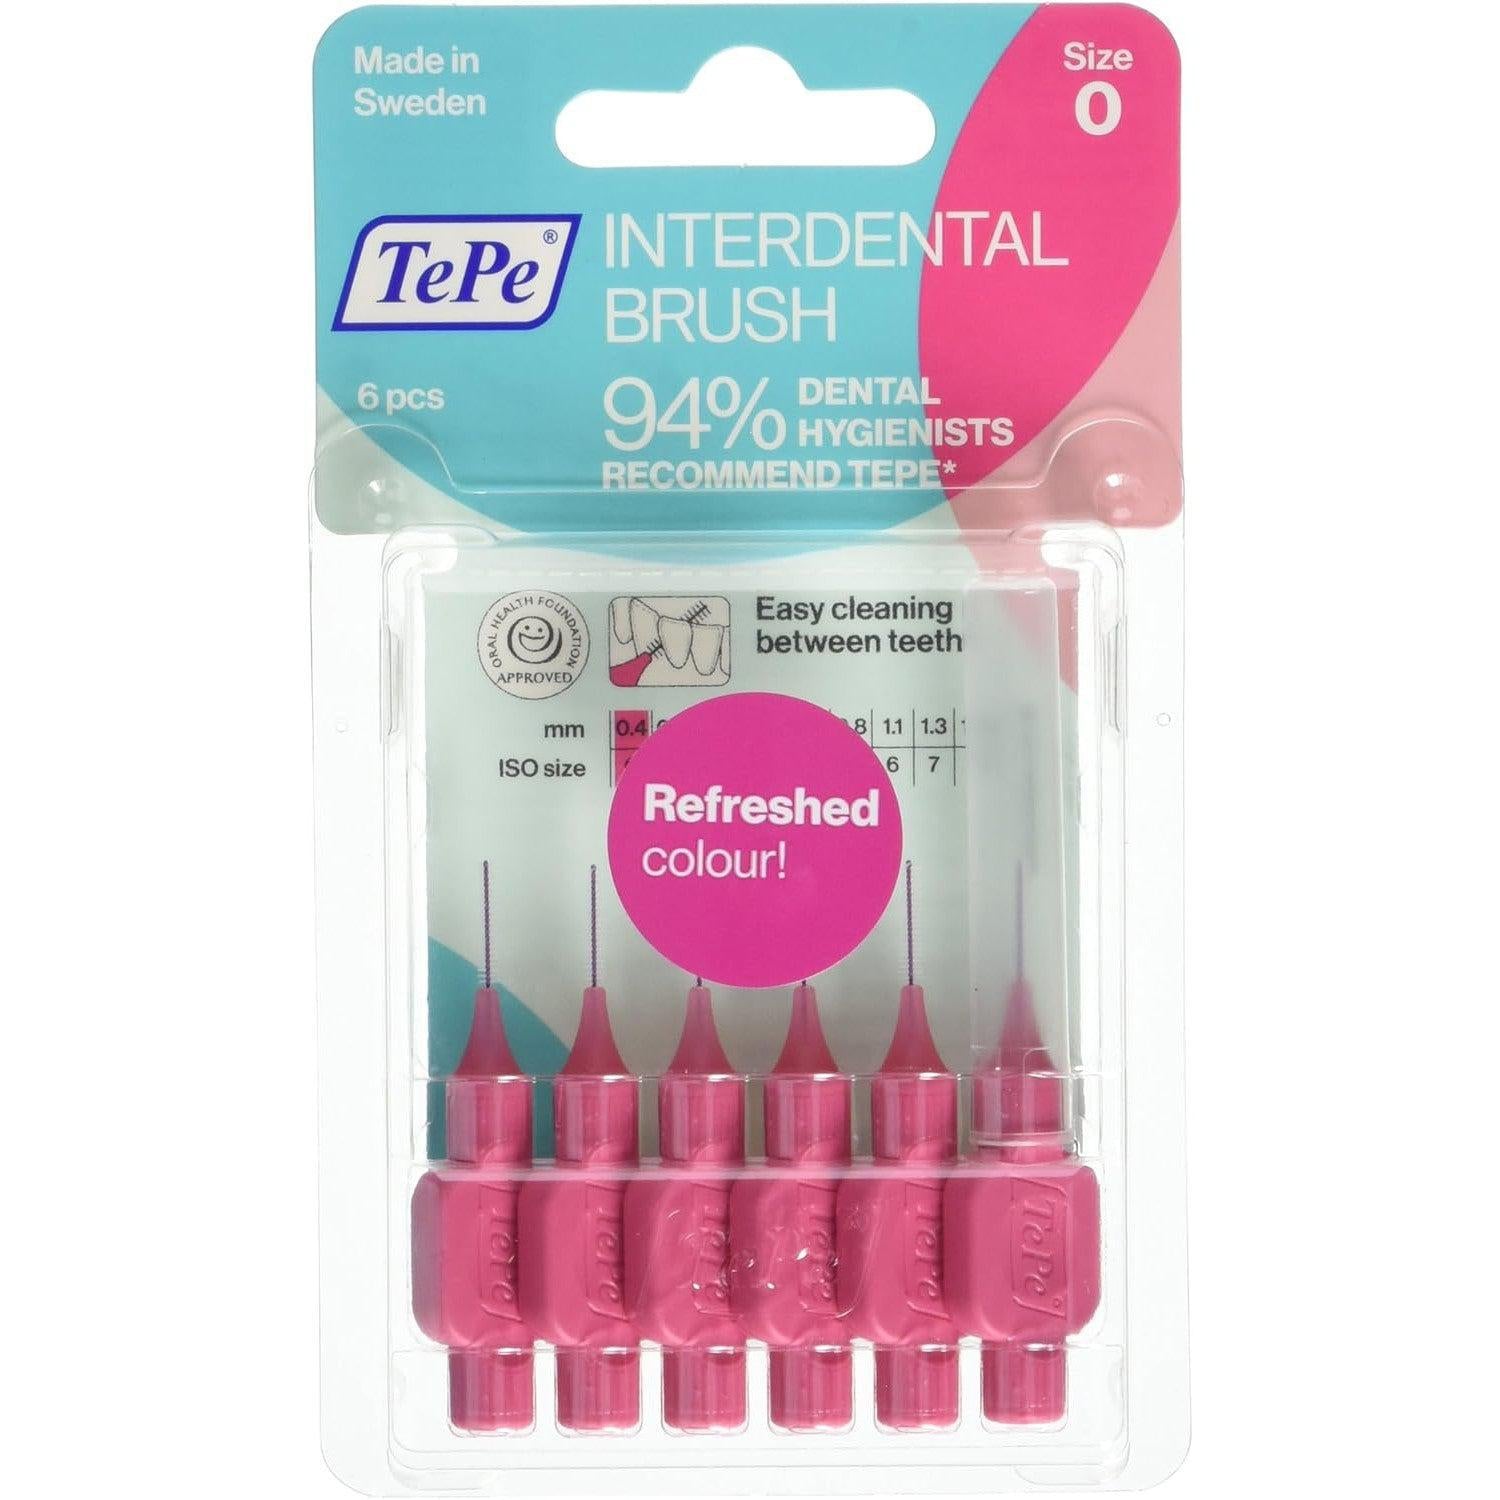 TePe Interdental Brush Pink 0.4mm Pack of 6